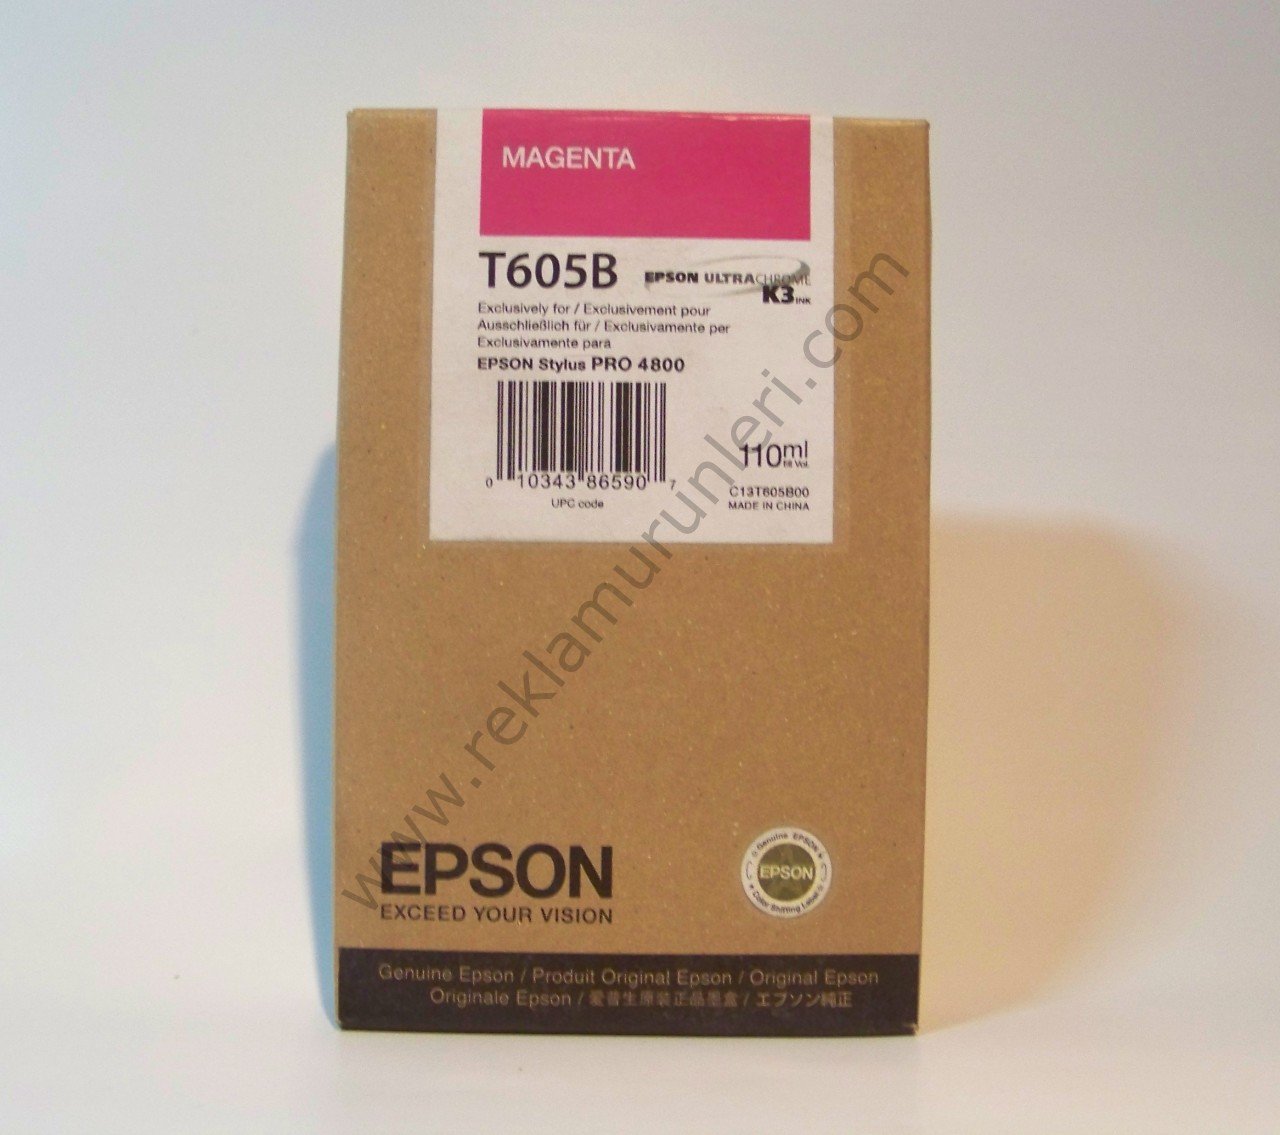 Epson Stylus Pro T605B Magenta Kartuş 110ml *2009 Tarihli*